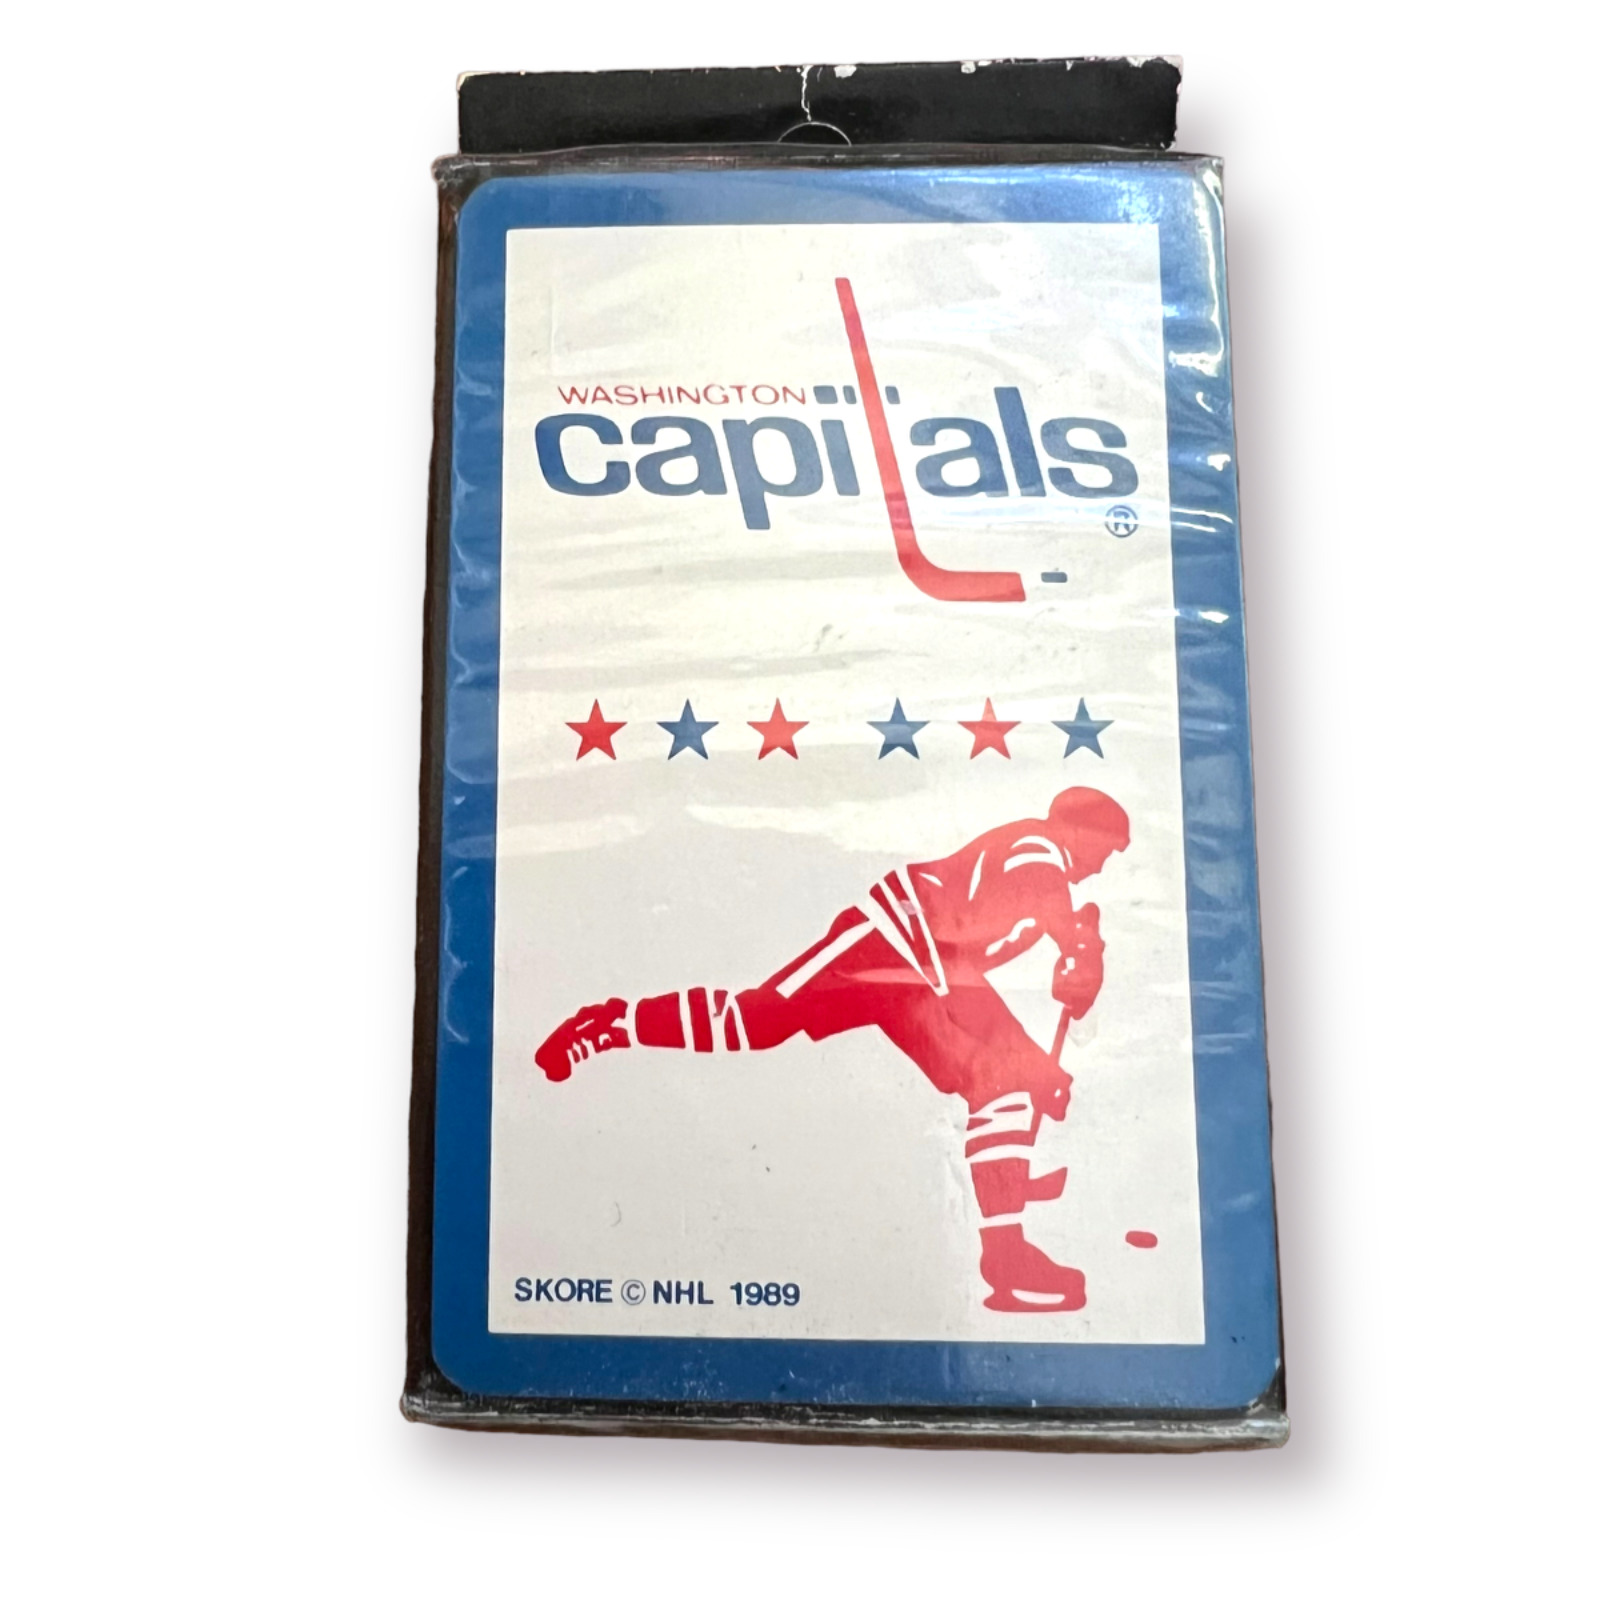 WASHINGTON CAPITALS NHL HOCKEY VINTAGE 1989 SKORE BRAND TEAM PLAYING CARDS NOS